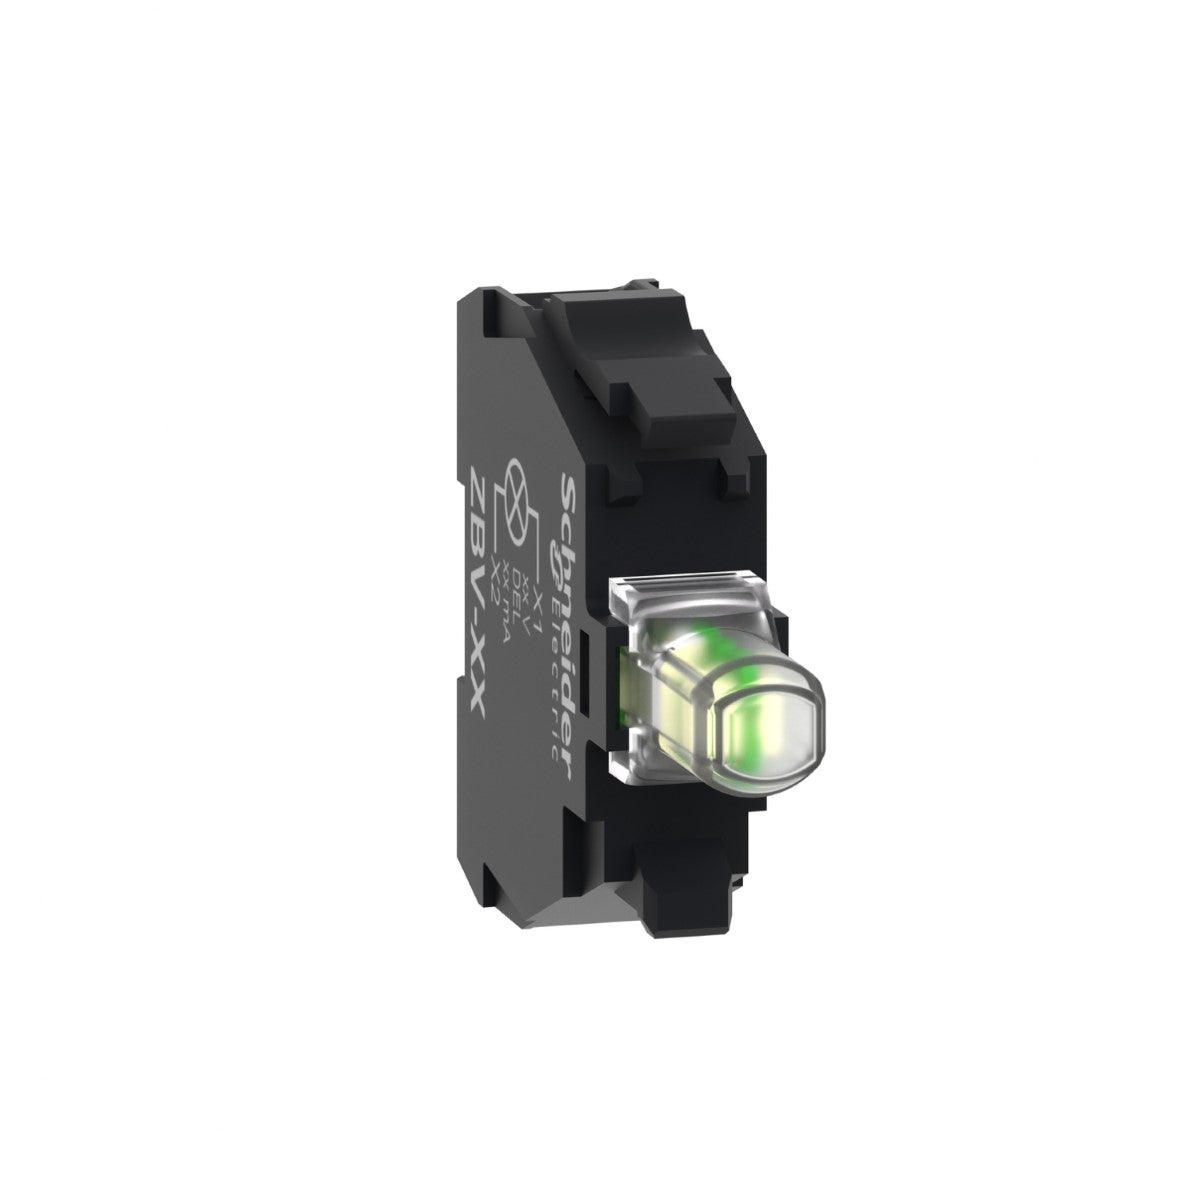 white light block for head Ã˜22 integral LED 230...240V screw clamp terminals